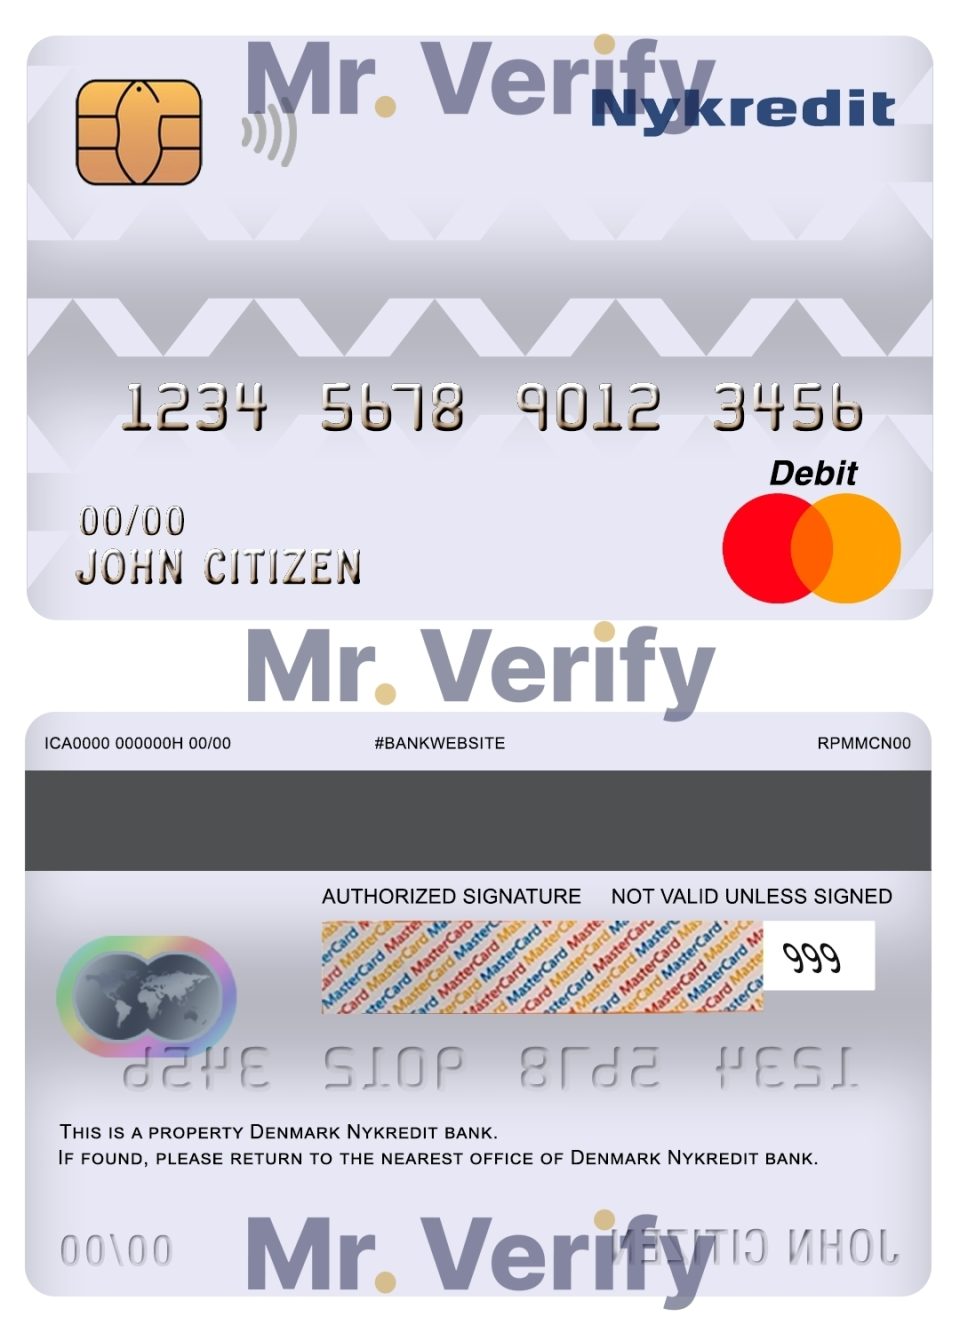 Editable Denmark Nykredit bank mastercard debit card Templates in PSD Format